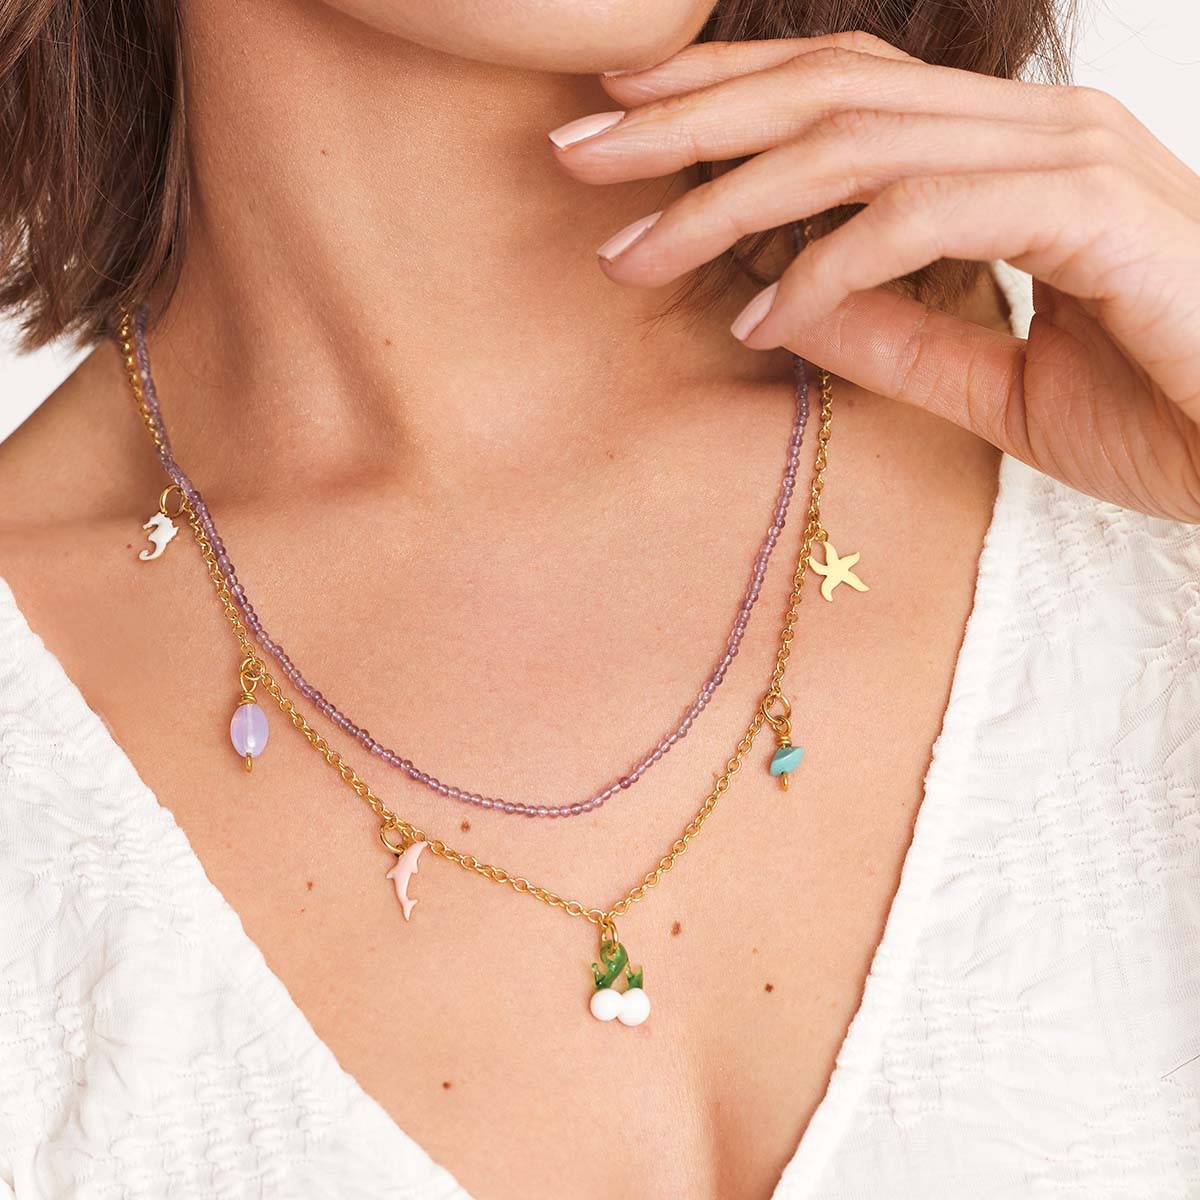 Ying Yang Necklace - Halskette - Lila - 18k vergoldet